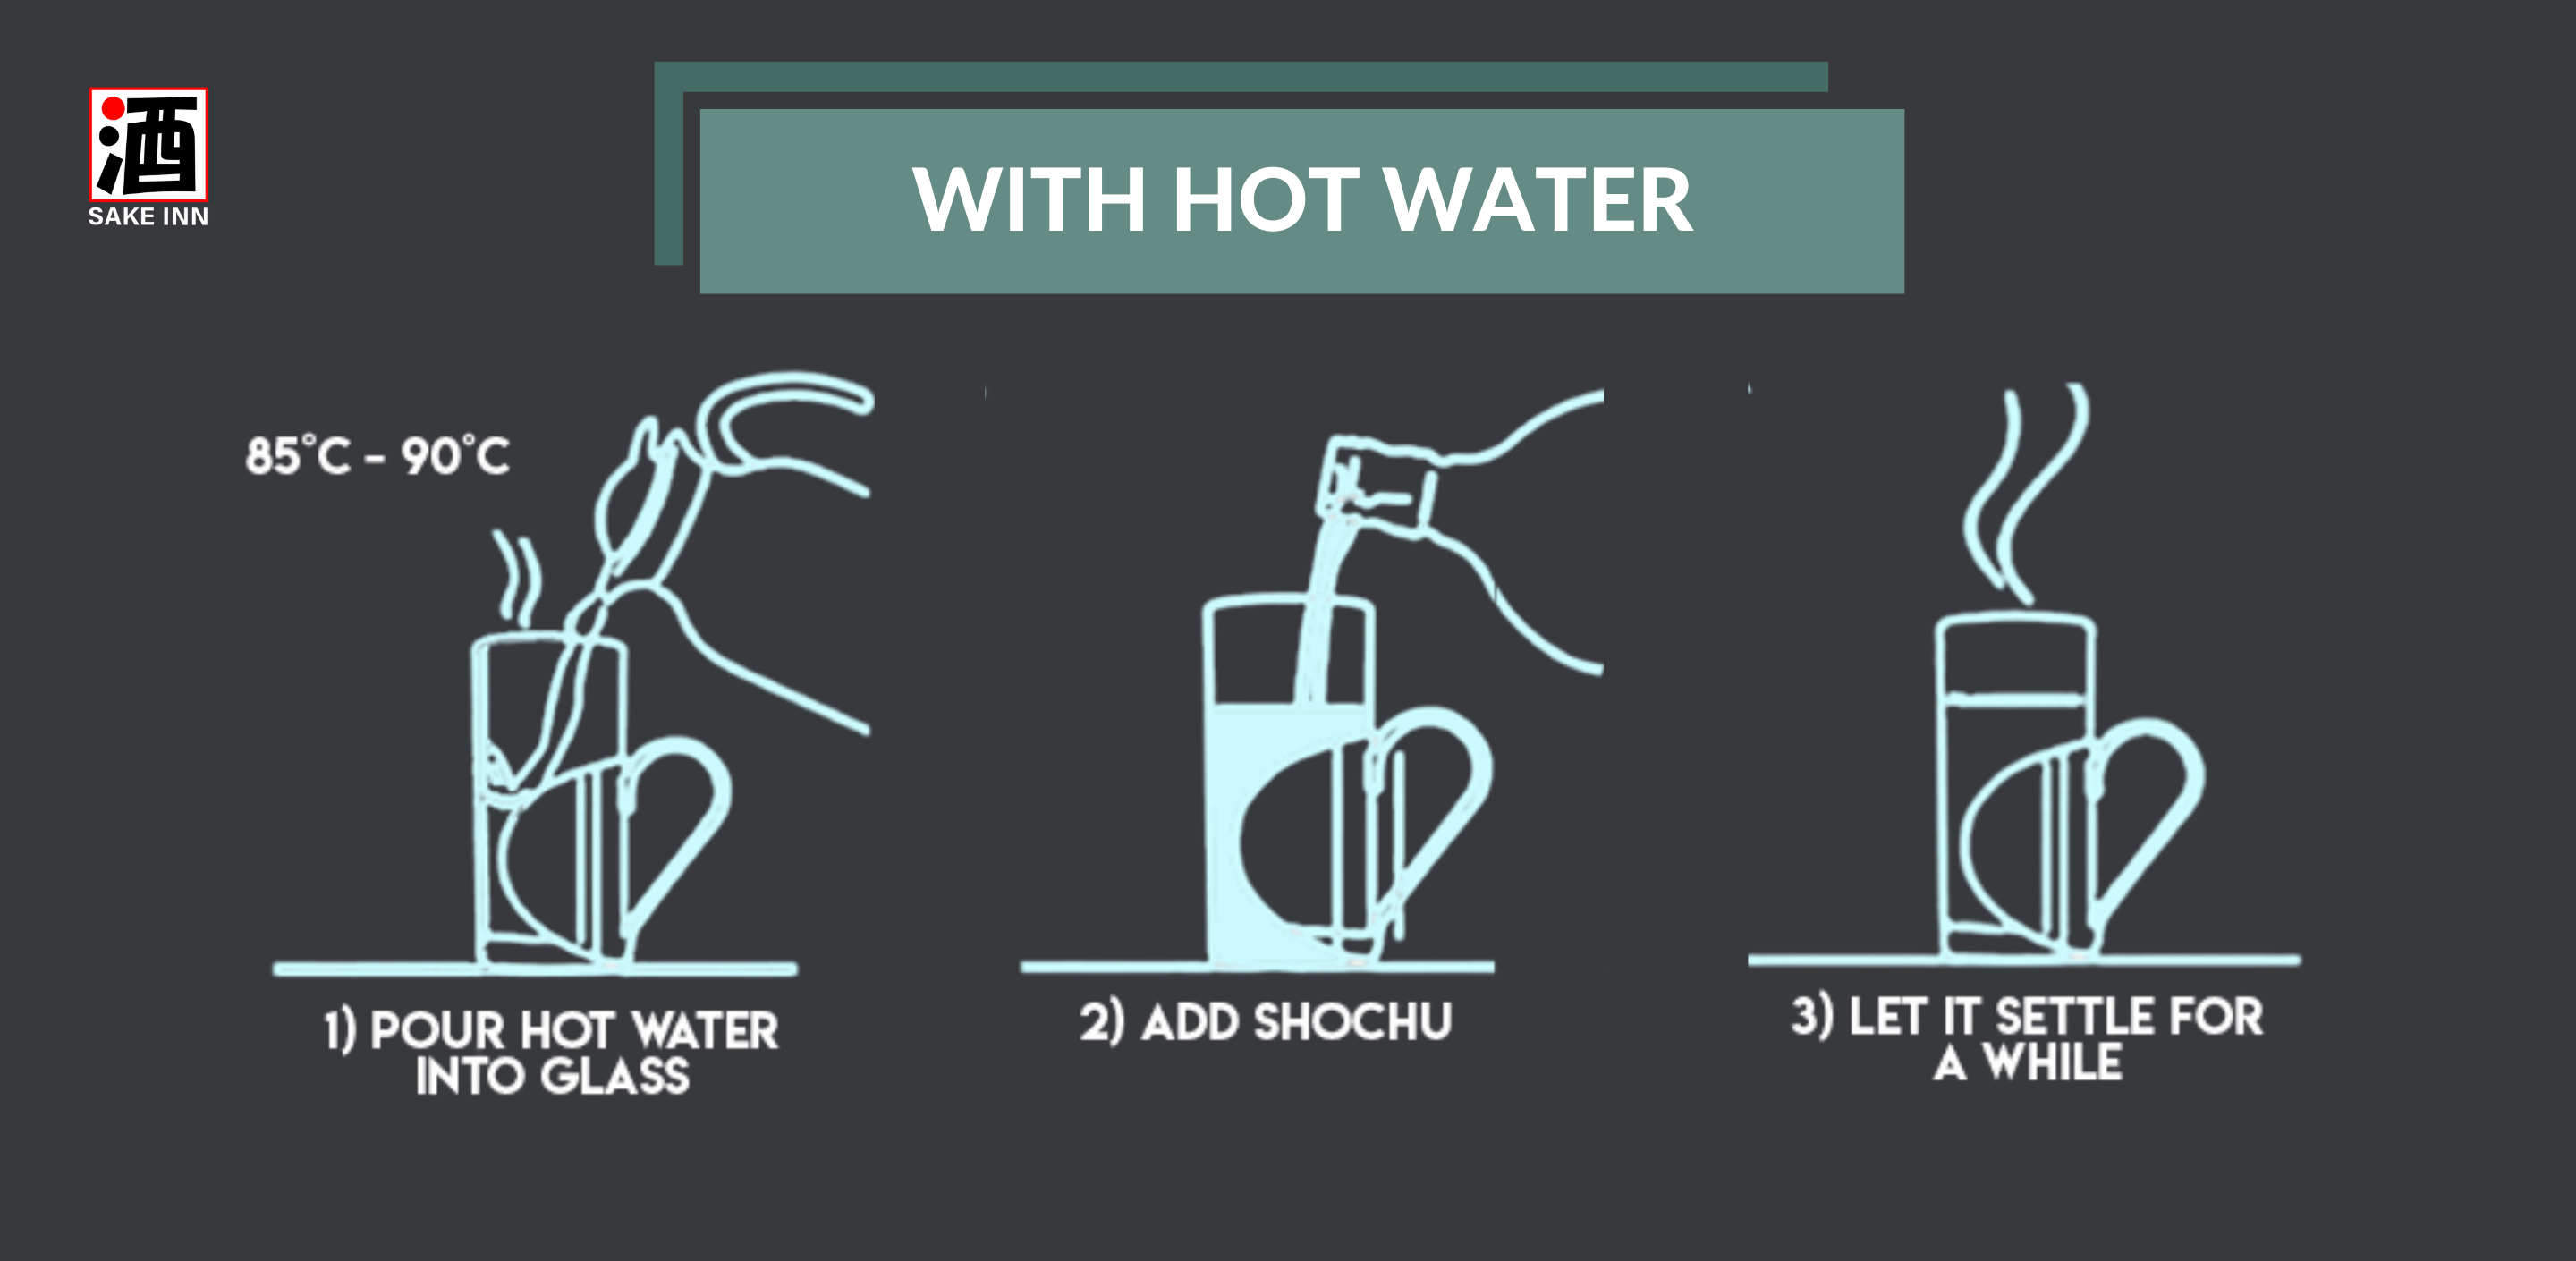 Sake Inn Japanese Shochu Beginner's Guide | Ways to drink shochu - with hot water